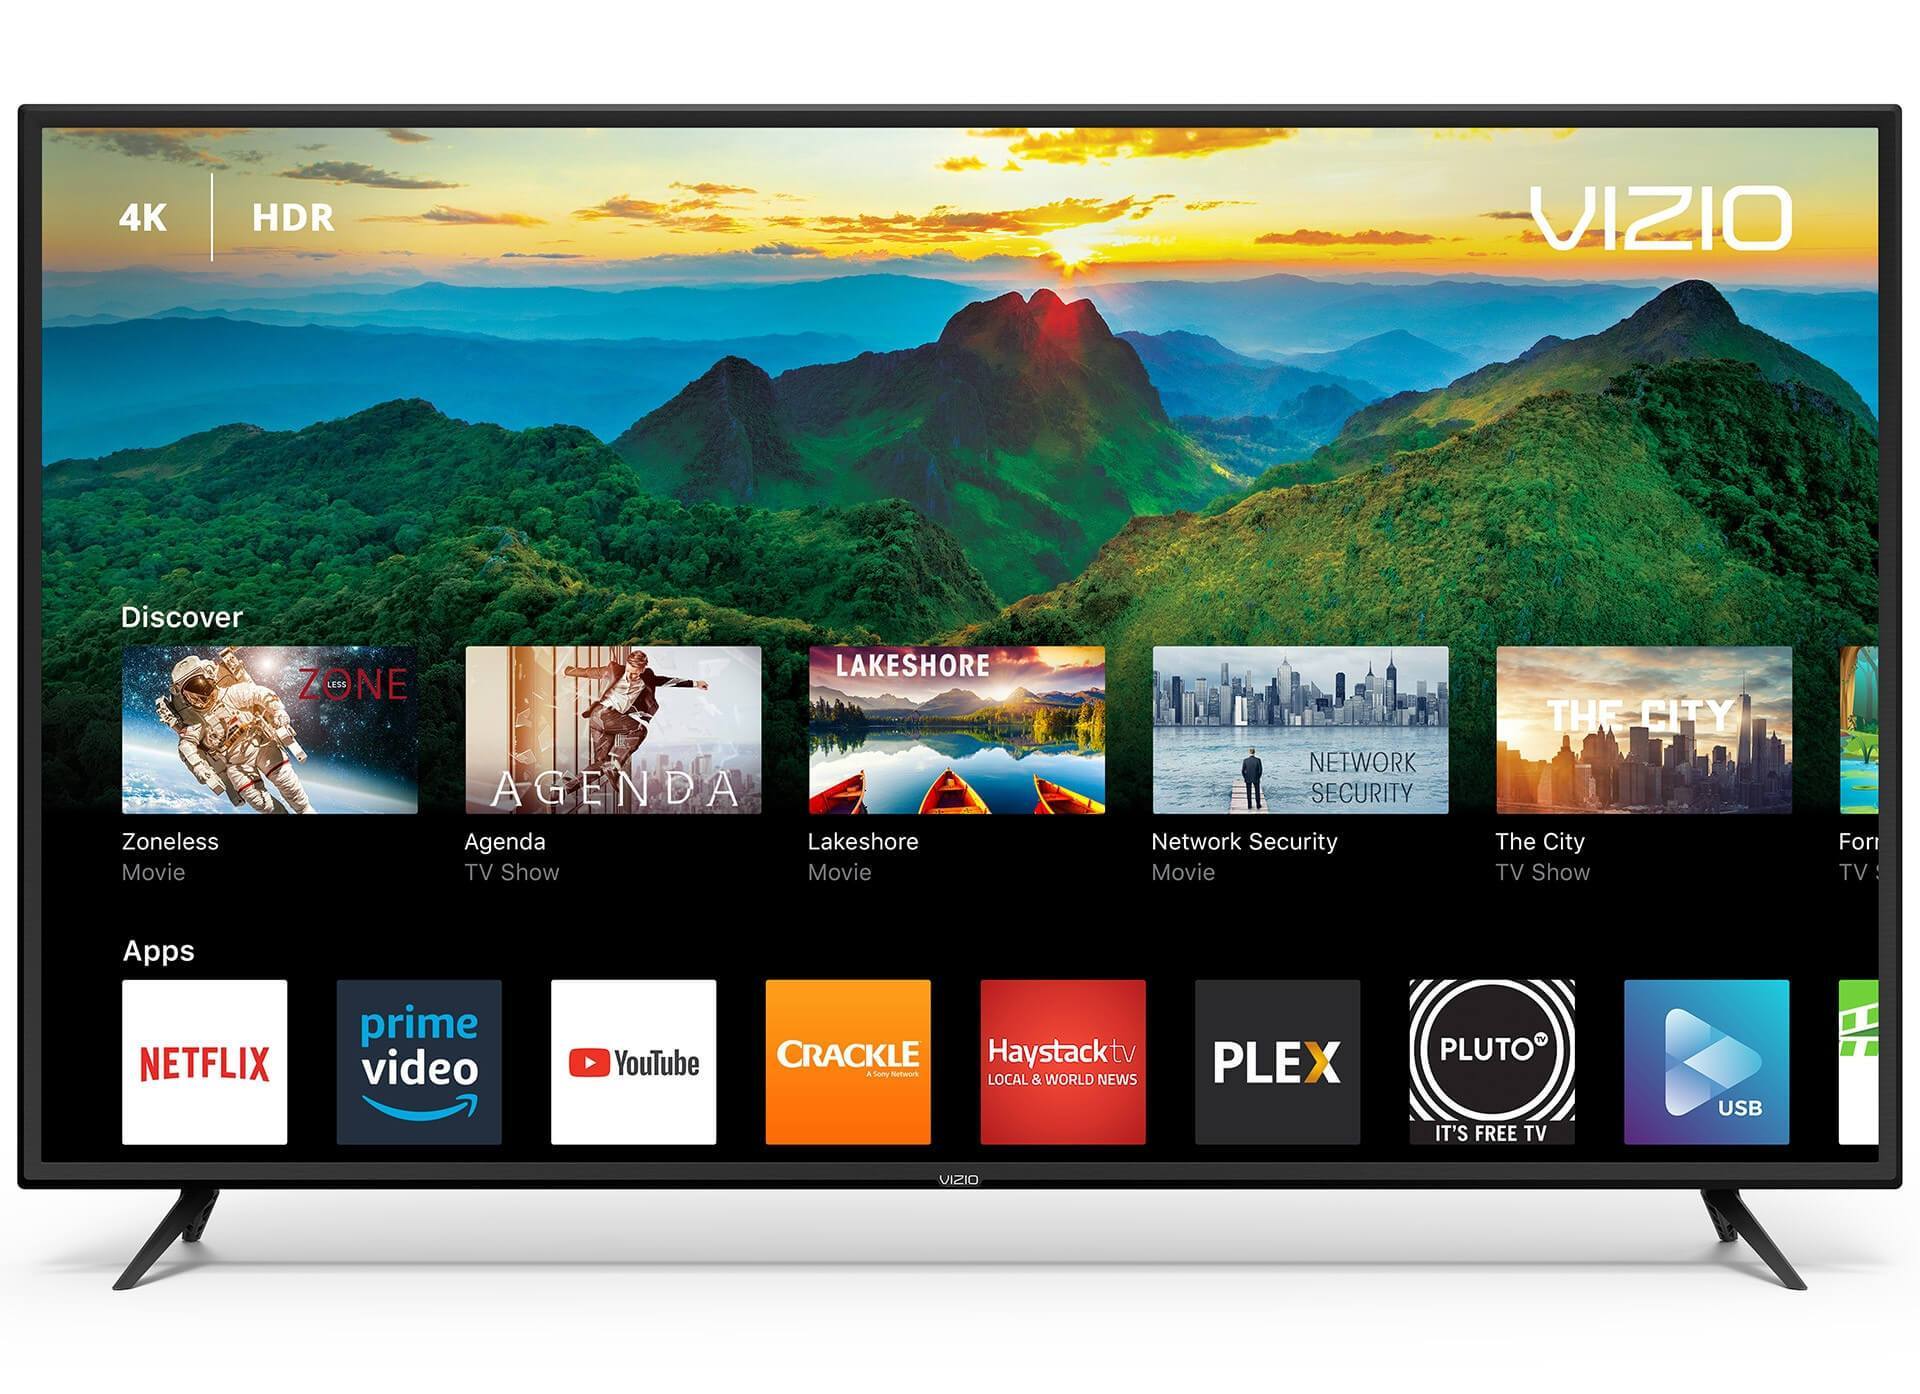 Nola lortu Xfinity aplikazioa VIZIO Smart TV-n?
